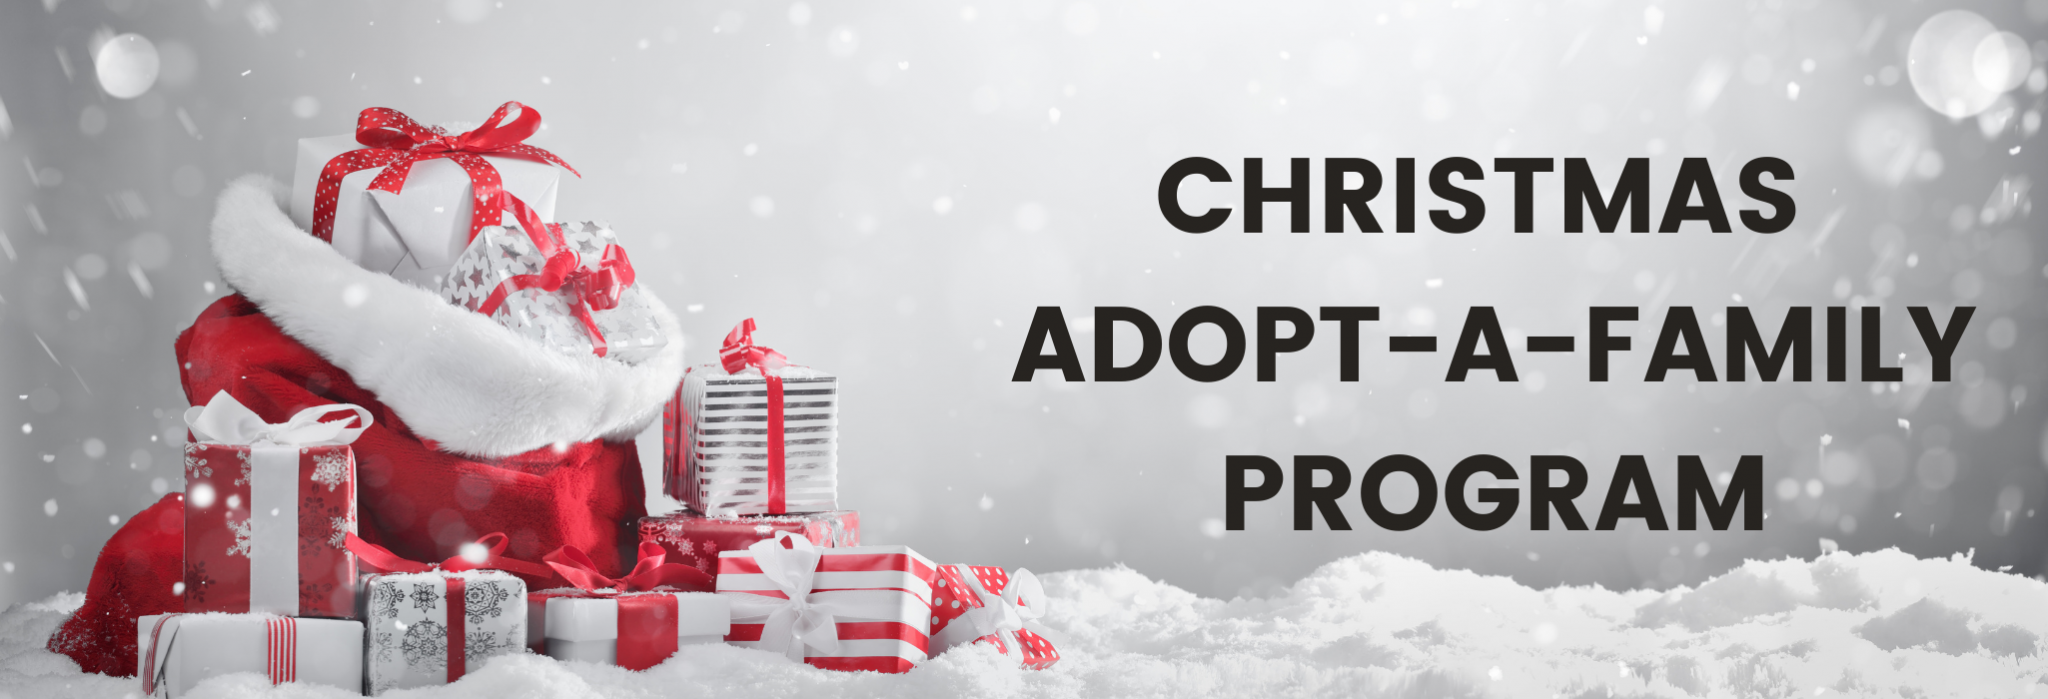 Christmas AdoptaFamily Program  TriCity Family Services